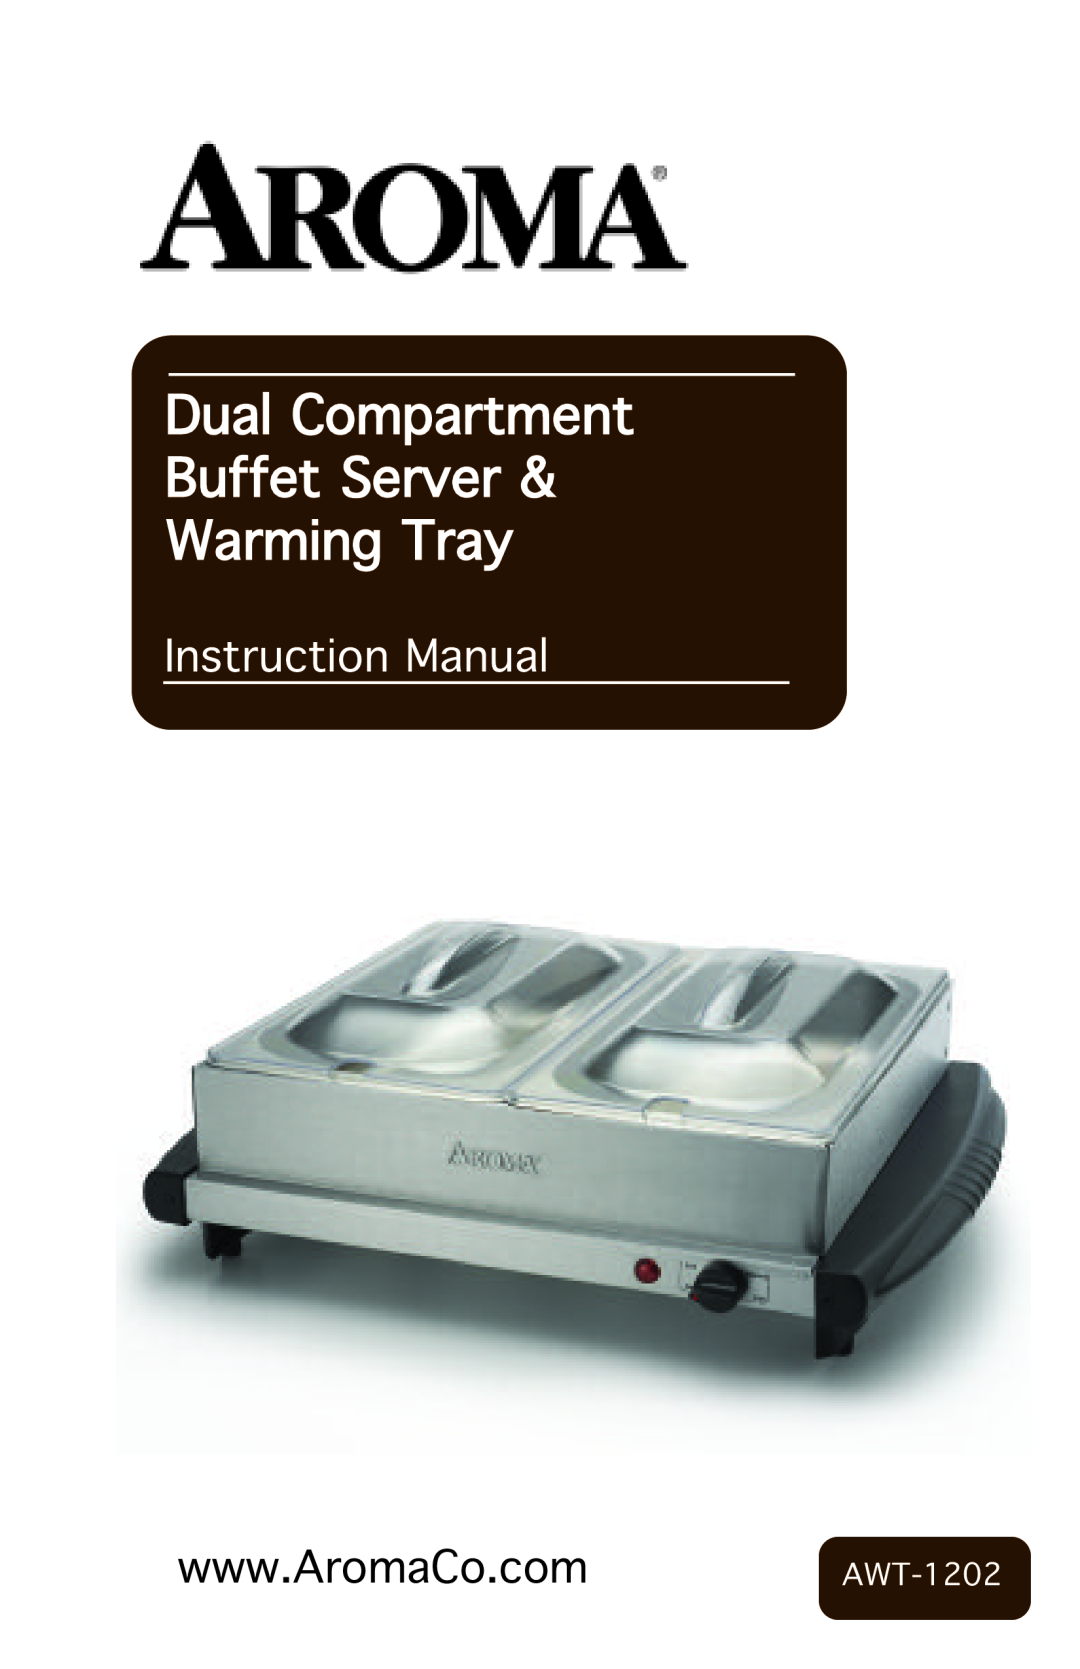 Aroma AWT-1202 instruction manual InstructionUManual, DualUCompartmentU BuffetUServerU&U WarmingUTrayU 